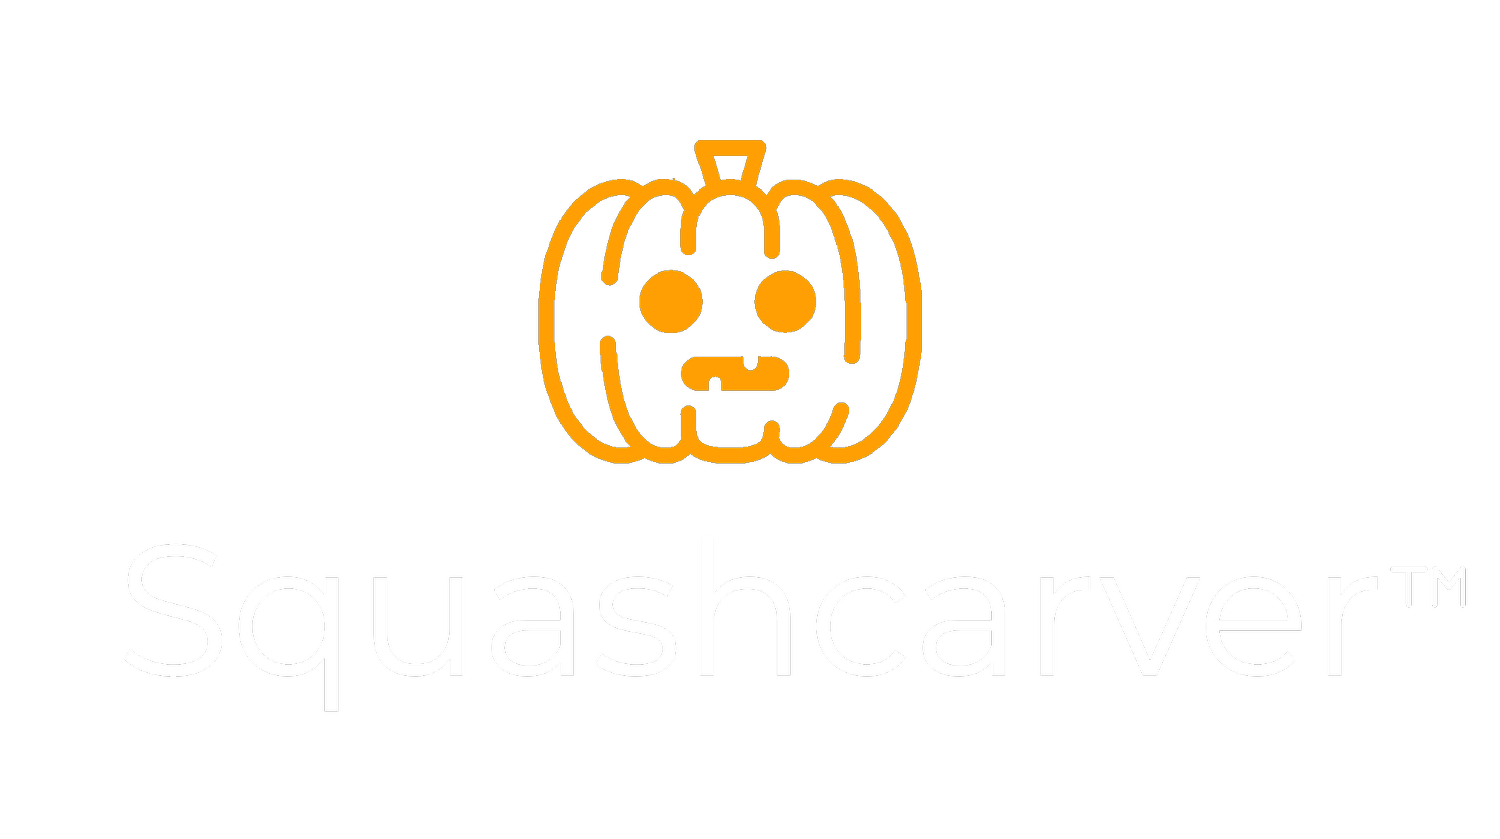 Squashcarver, LLC